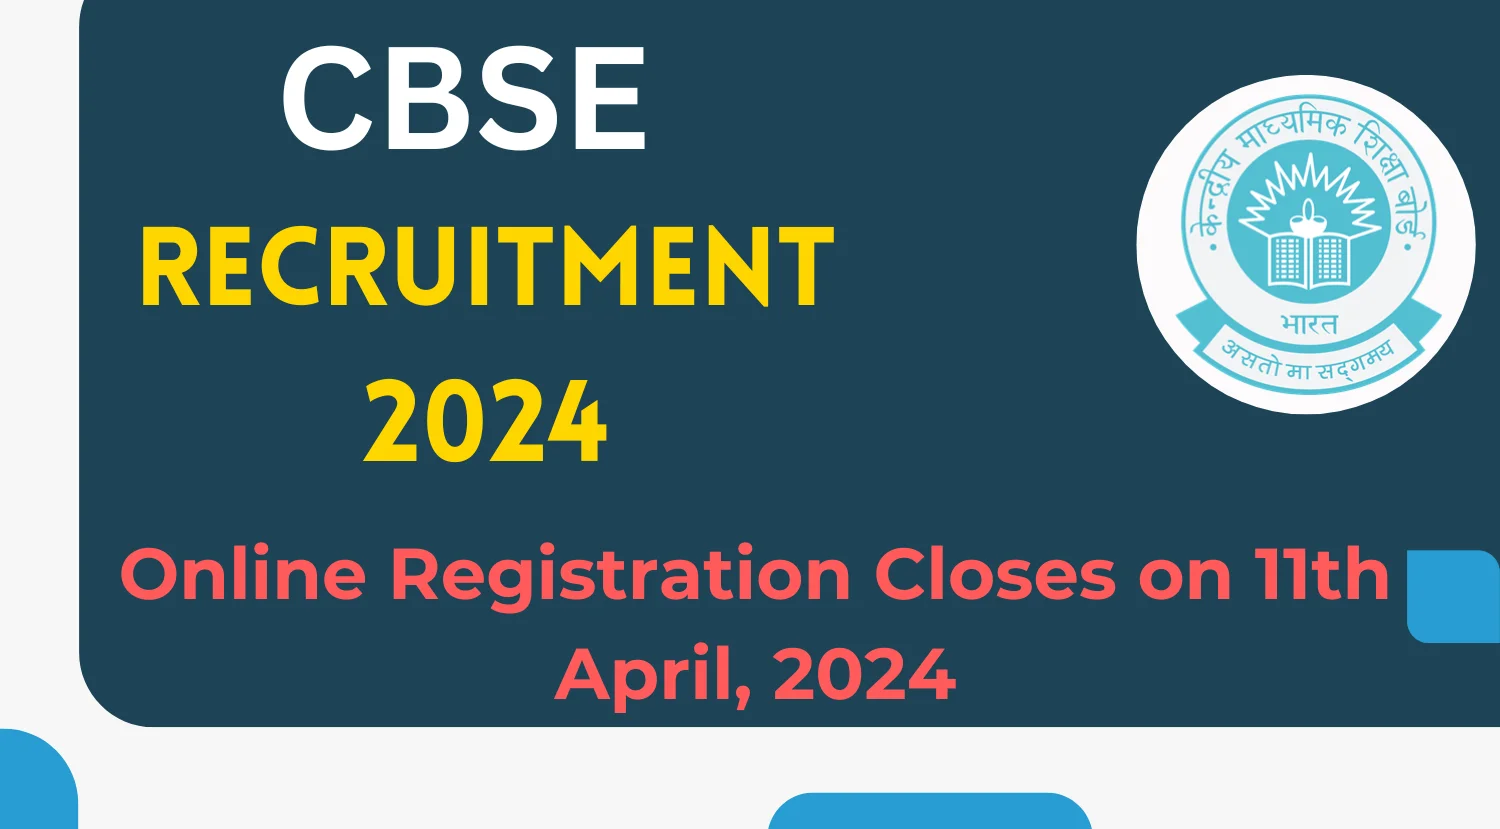 CBSE Group ABC Rekruttering 2024